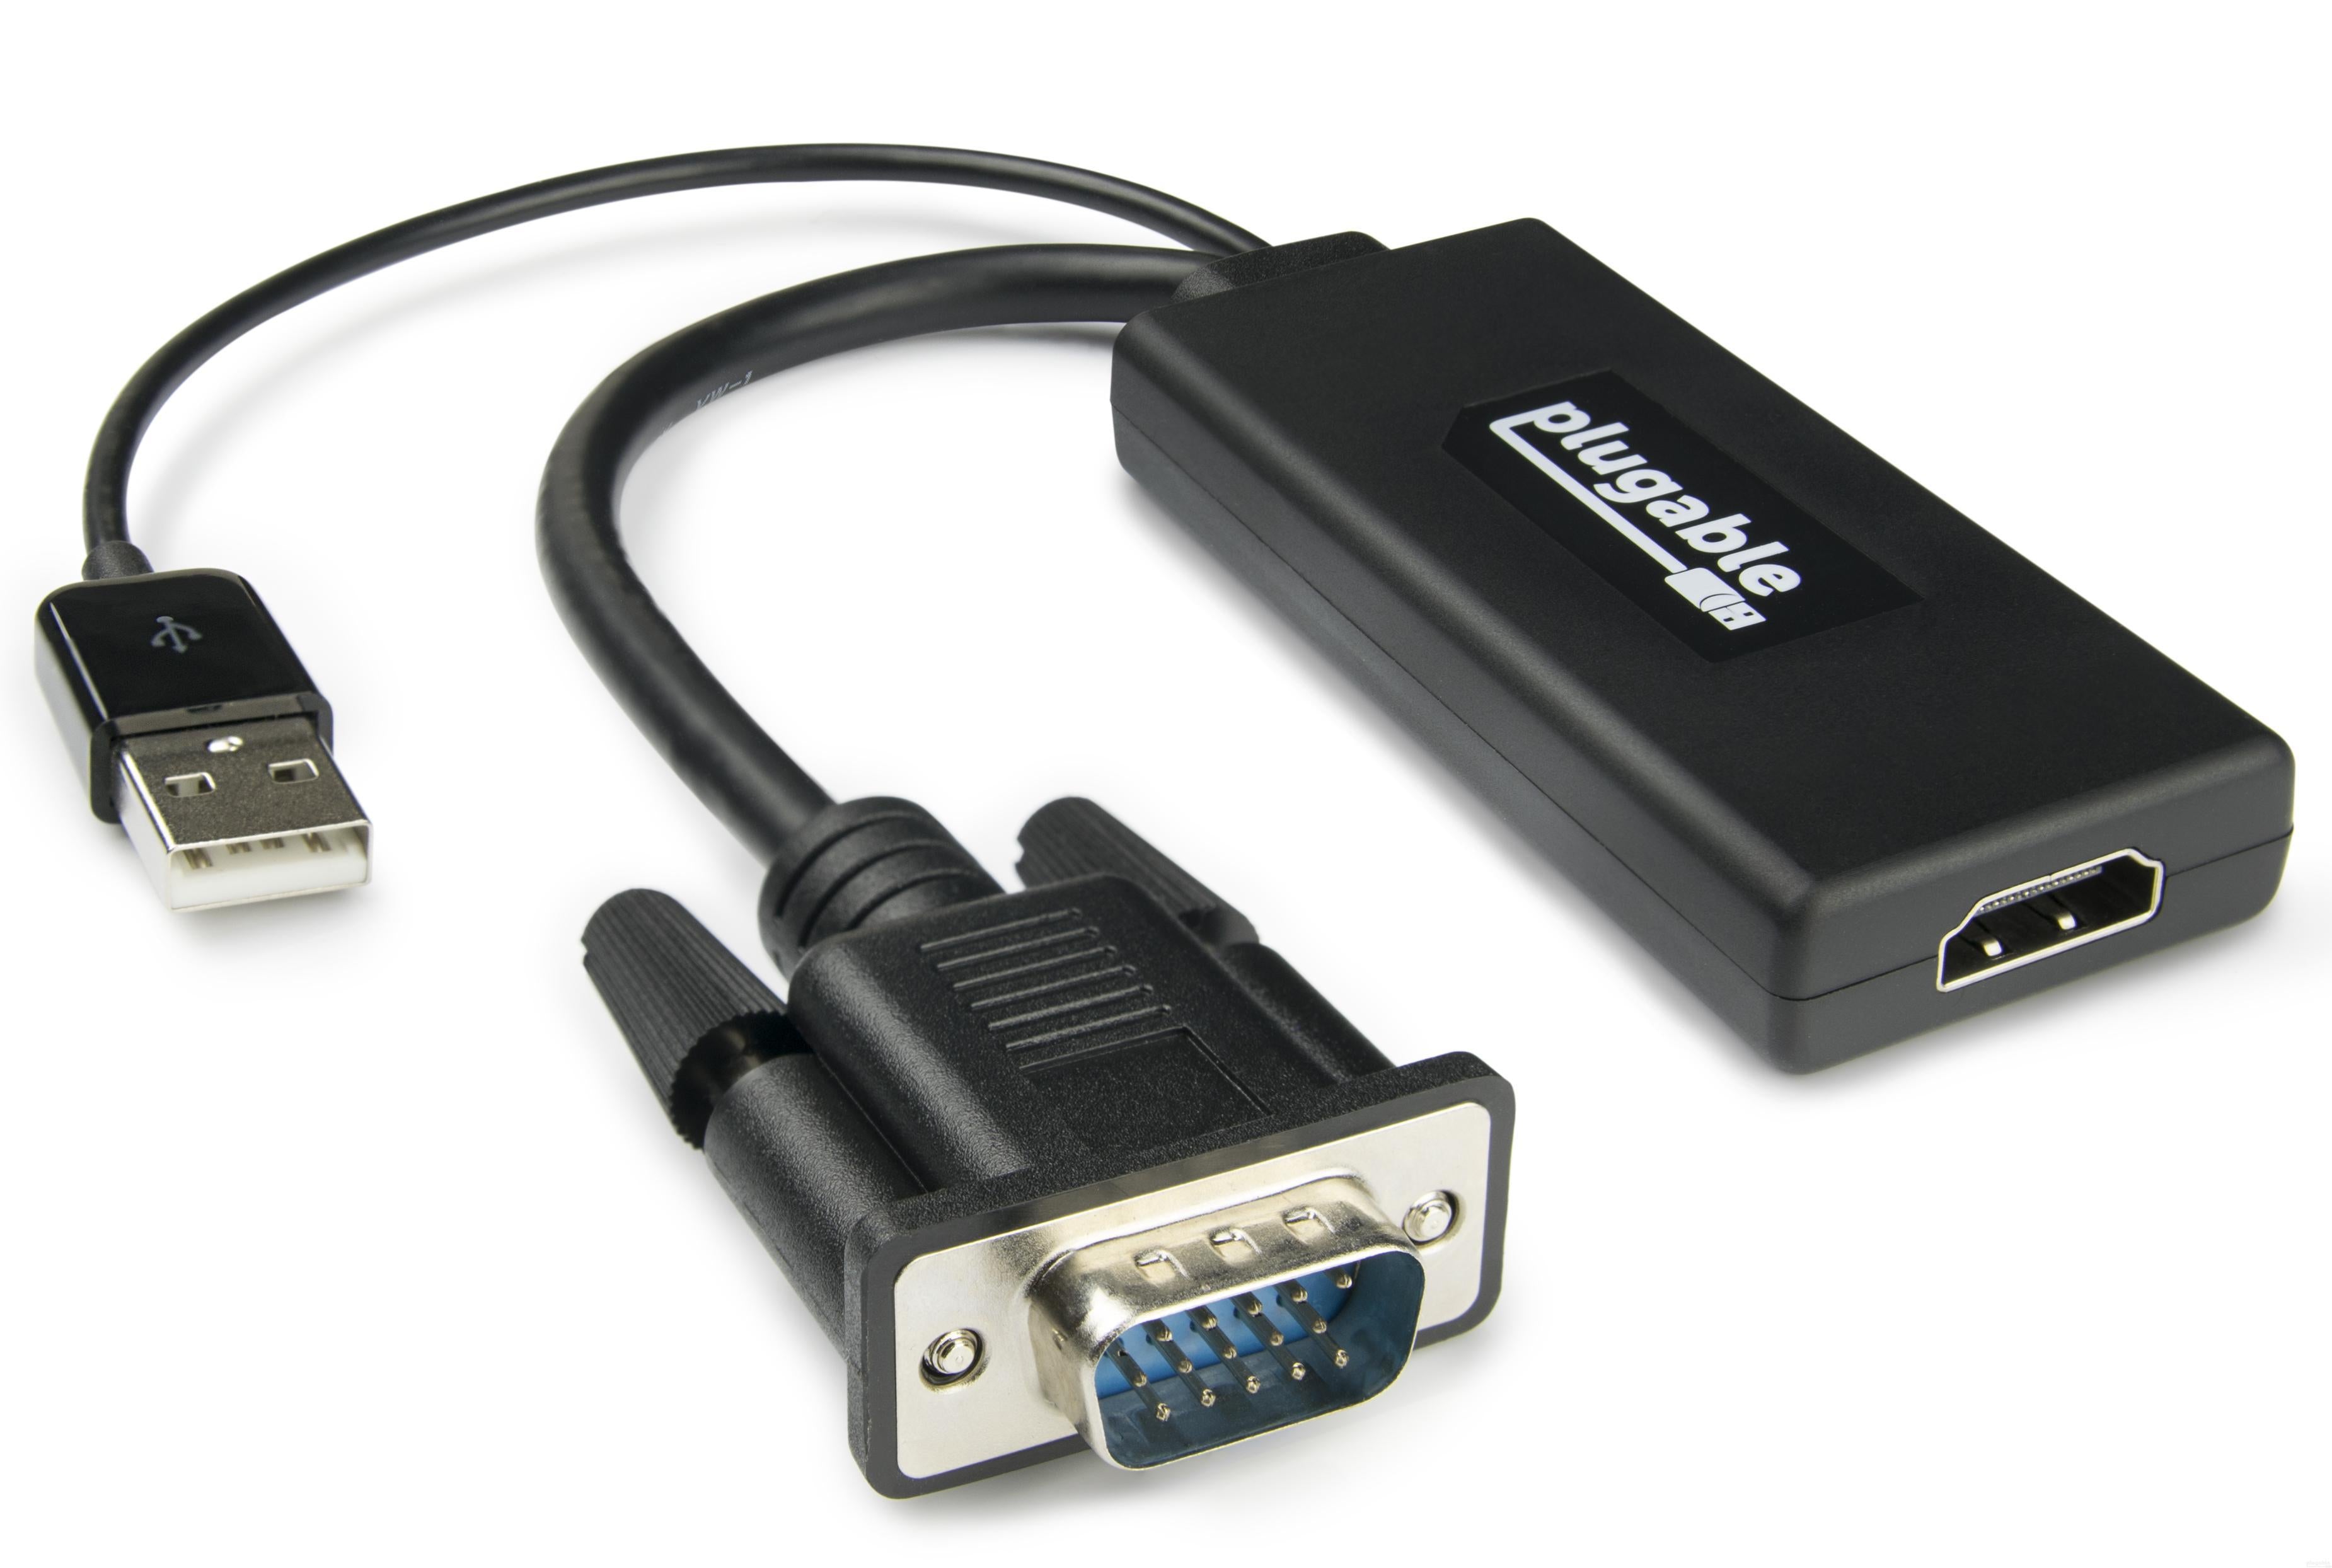 Økologi Fredag stakåndet Plugable VGA to HDMI Active Adapter with Audio – Plugable Technologies